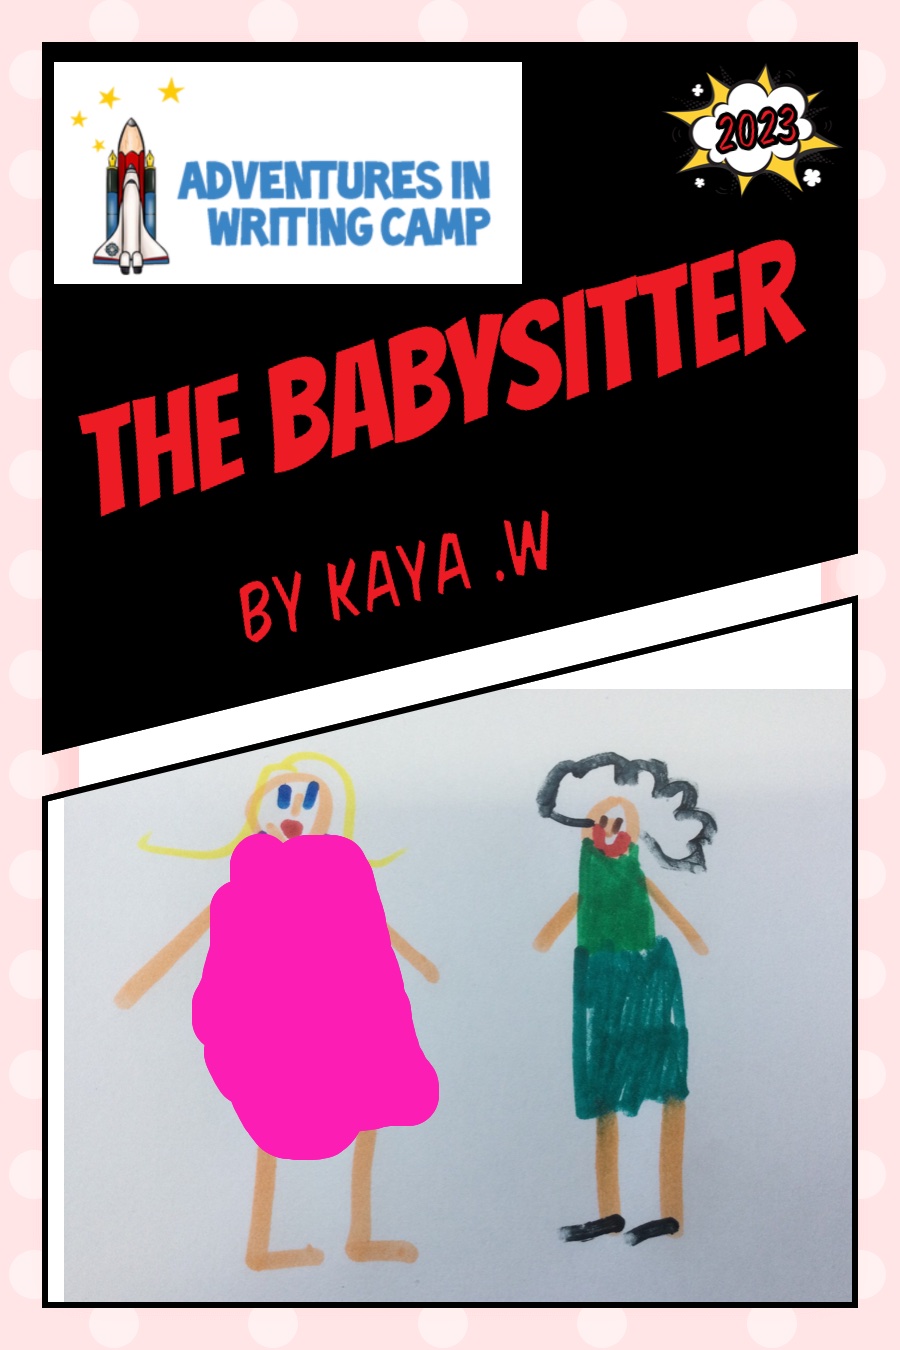 The Babysitter by Kaya W